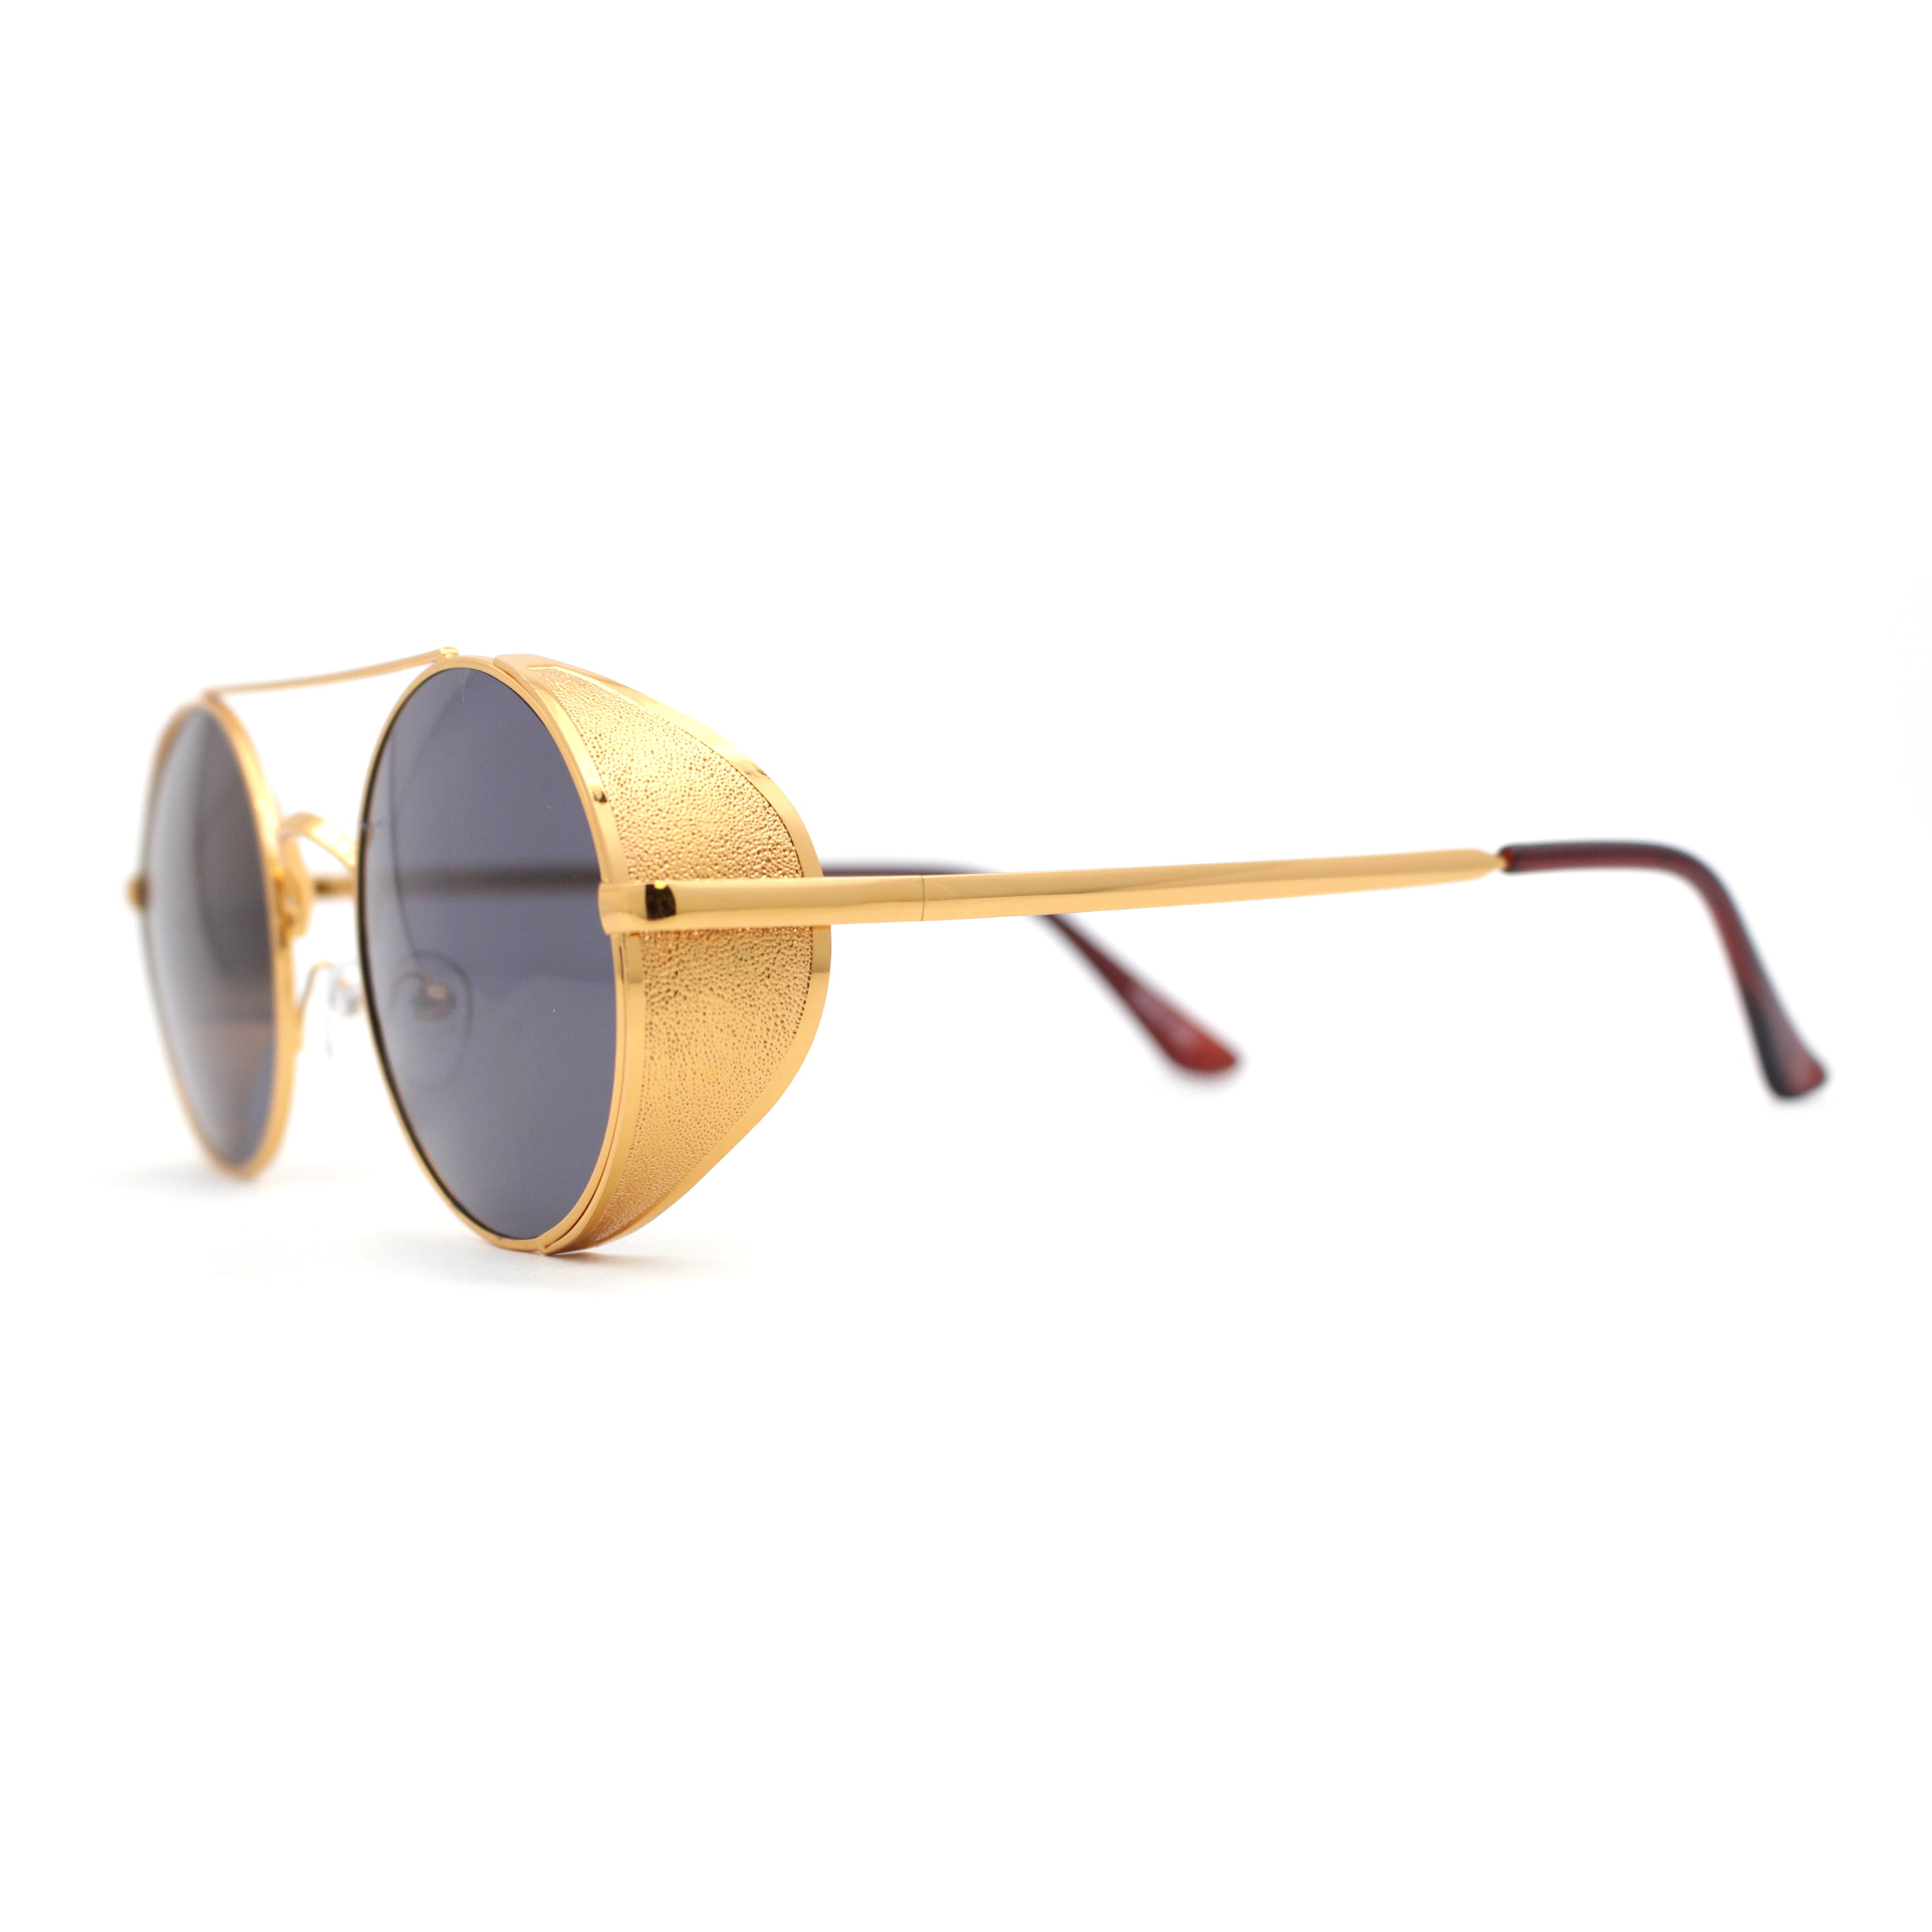 Bridge Sunglasses Double Gold Round - Black Racer Side Retro Yellow Circle Lens Cafe Windbreaker